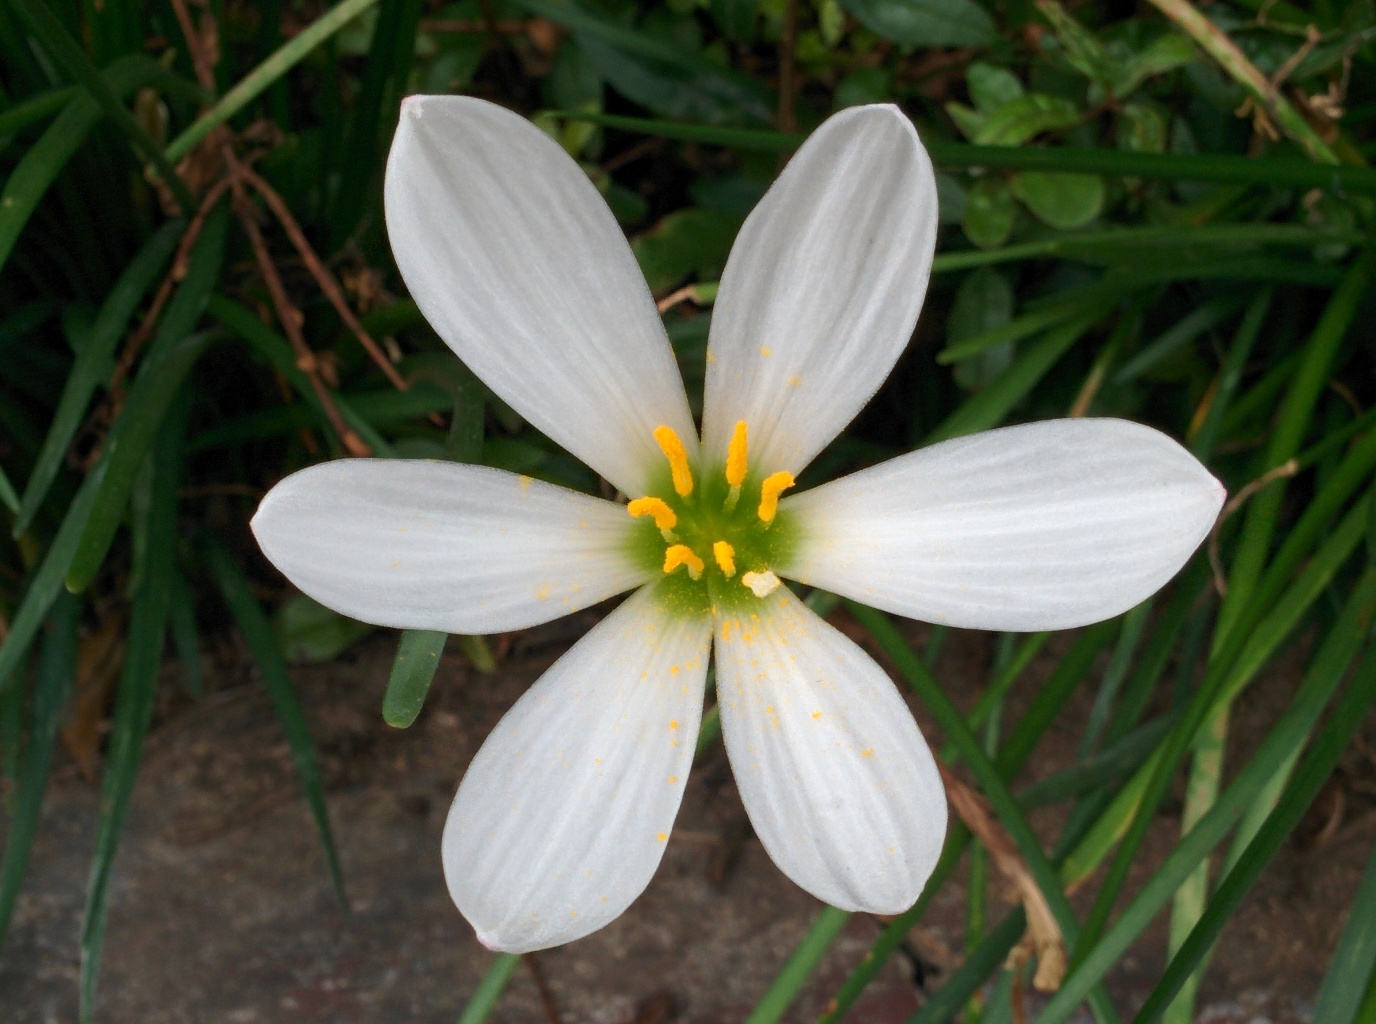 IMG_20150926_163350.jpg 난초잎 닮은 긴 이파리, 꽃잎 여섯 개의 하얀색 꽃 - 흰꽃나도사프란